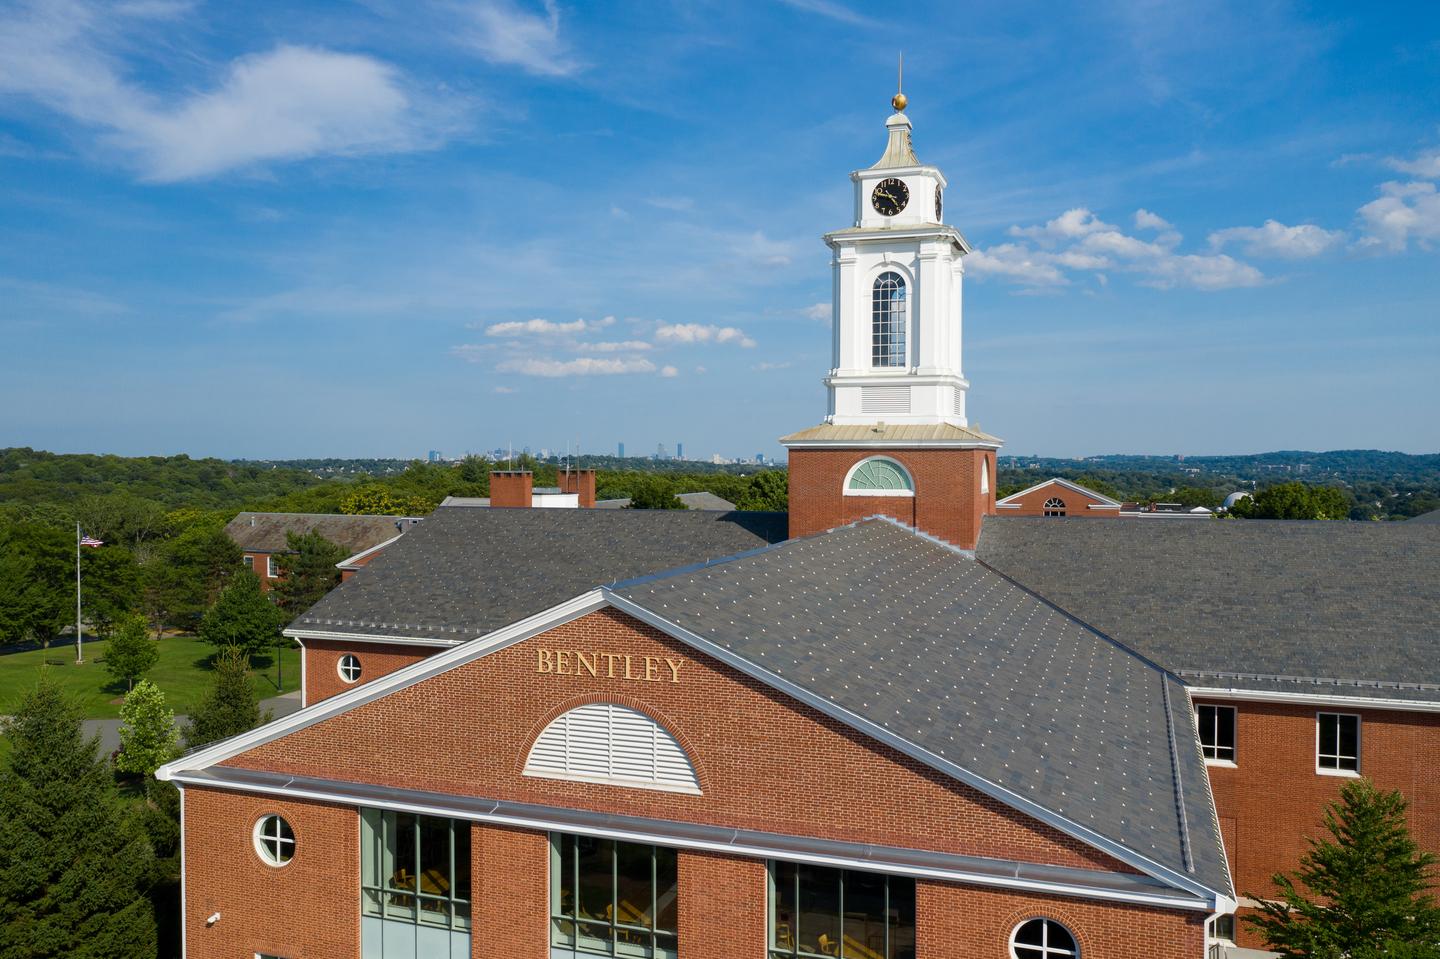 The clocktower at Bentley University